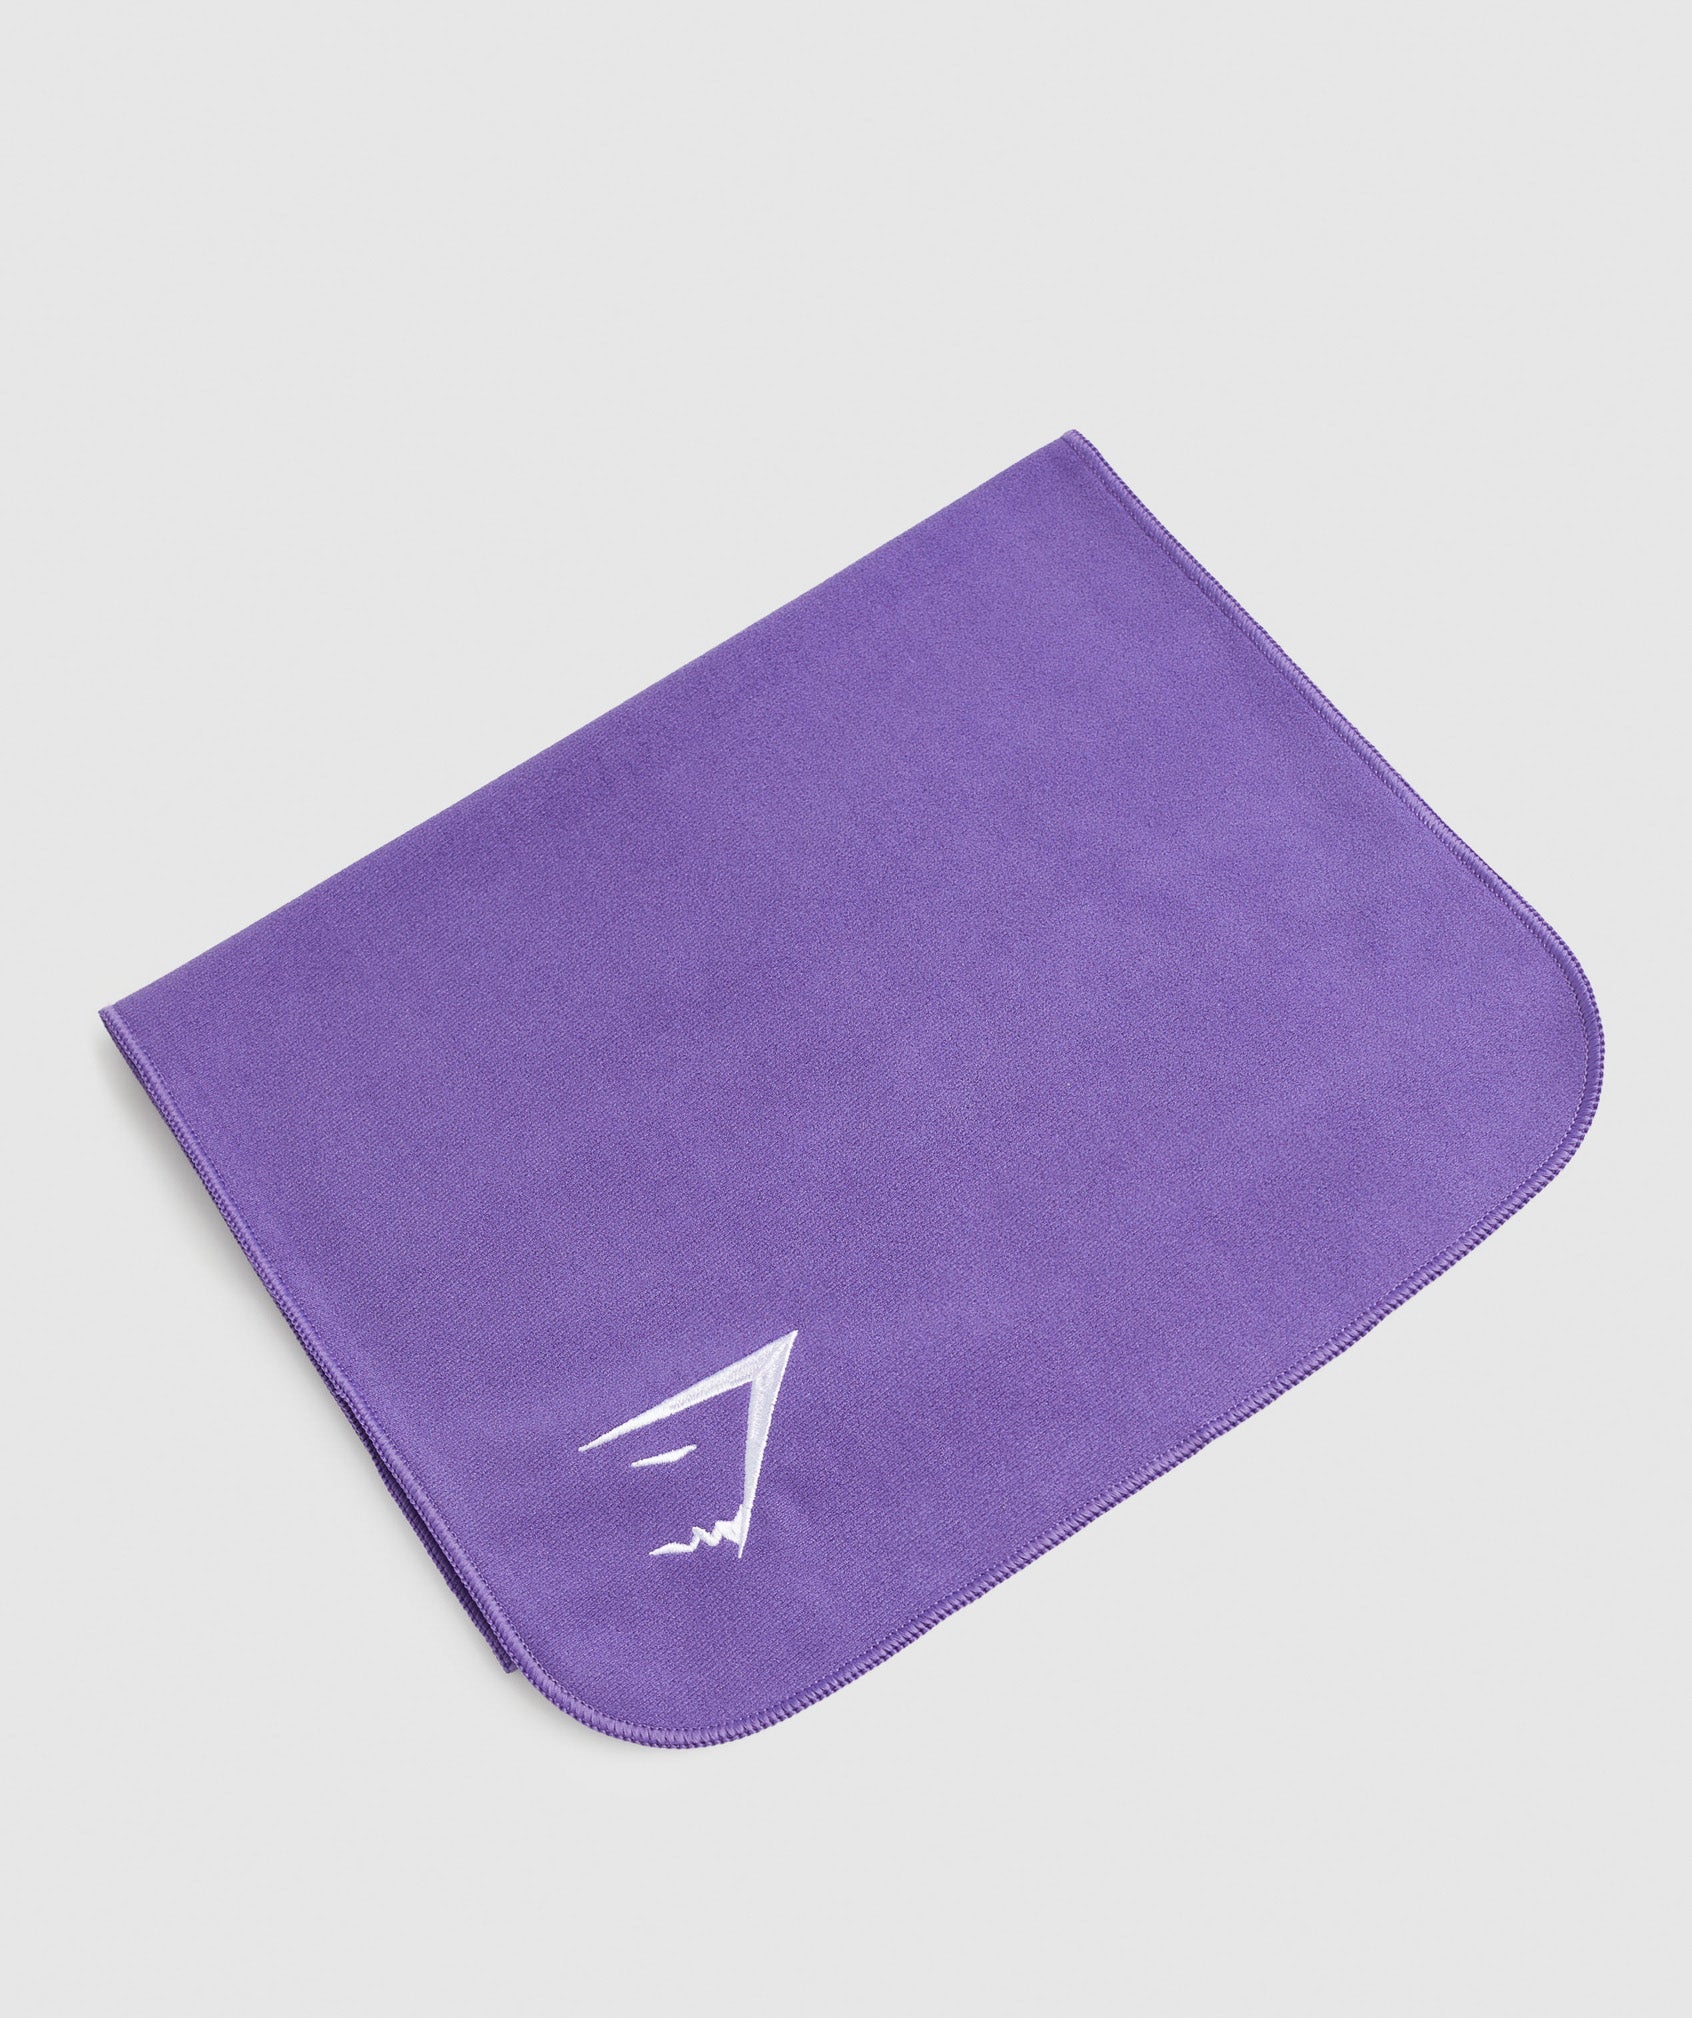 Sweat Towel in Stellar Purple - view 1